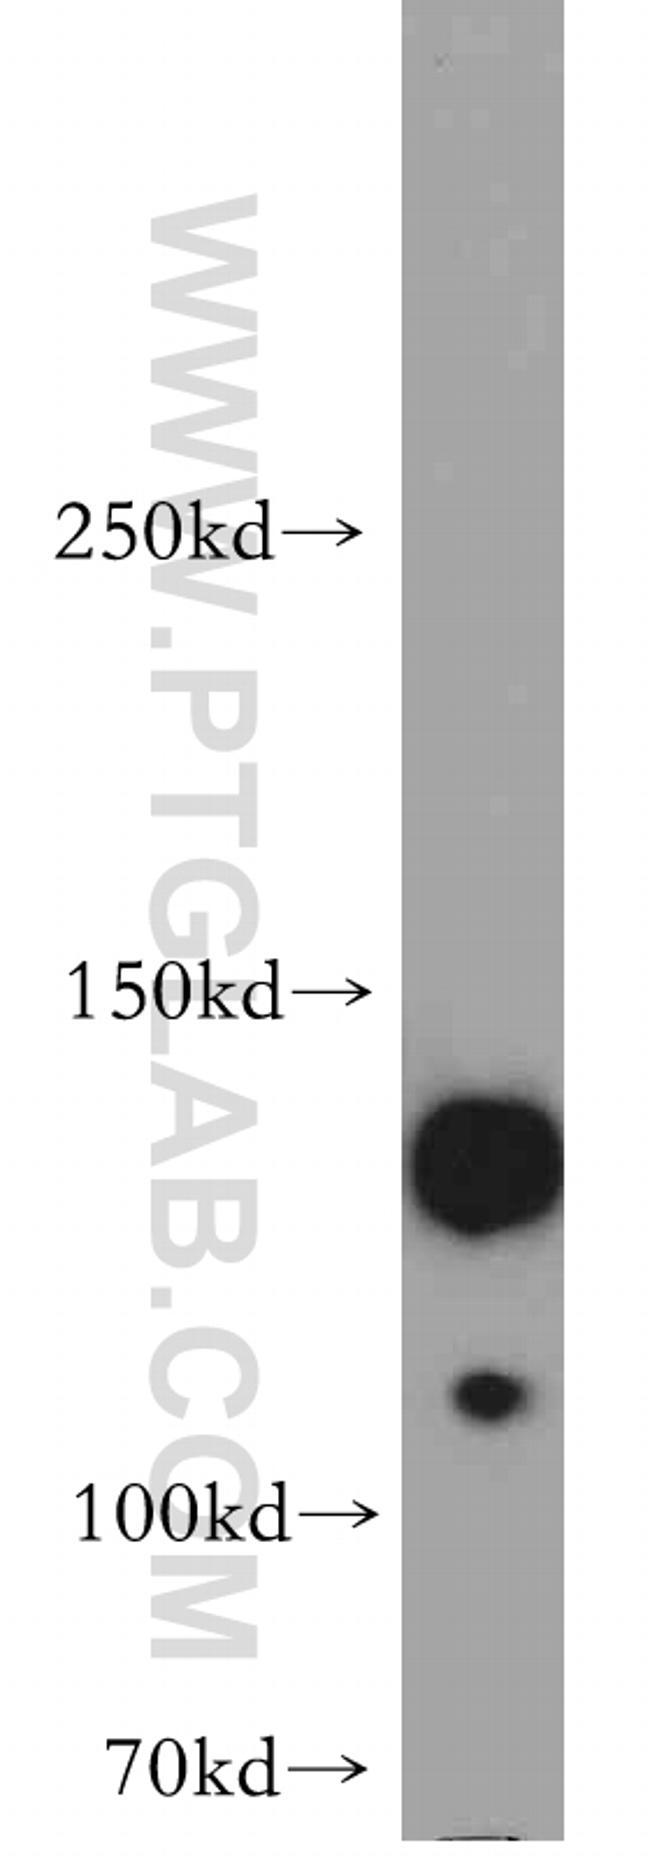 SRGAP1 Antibody in Western Blot (WB)